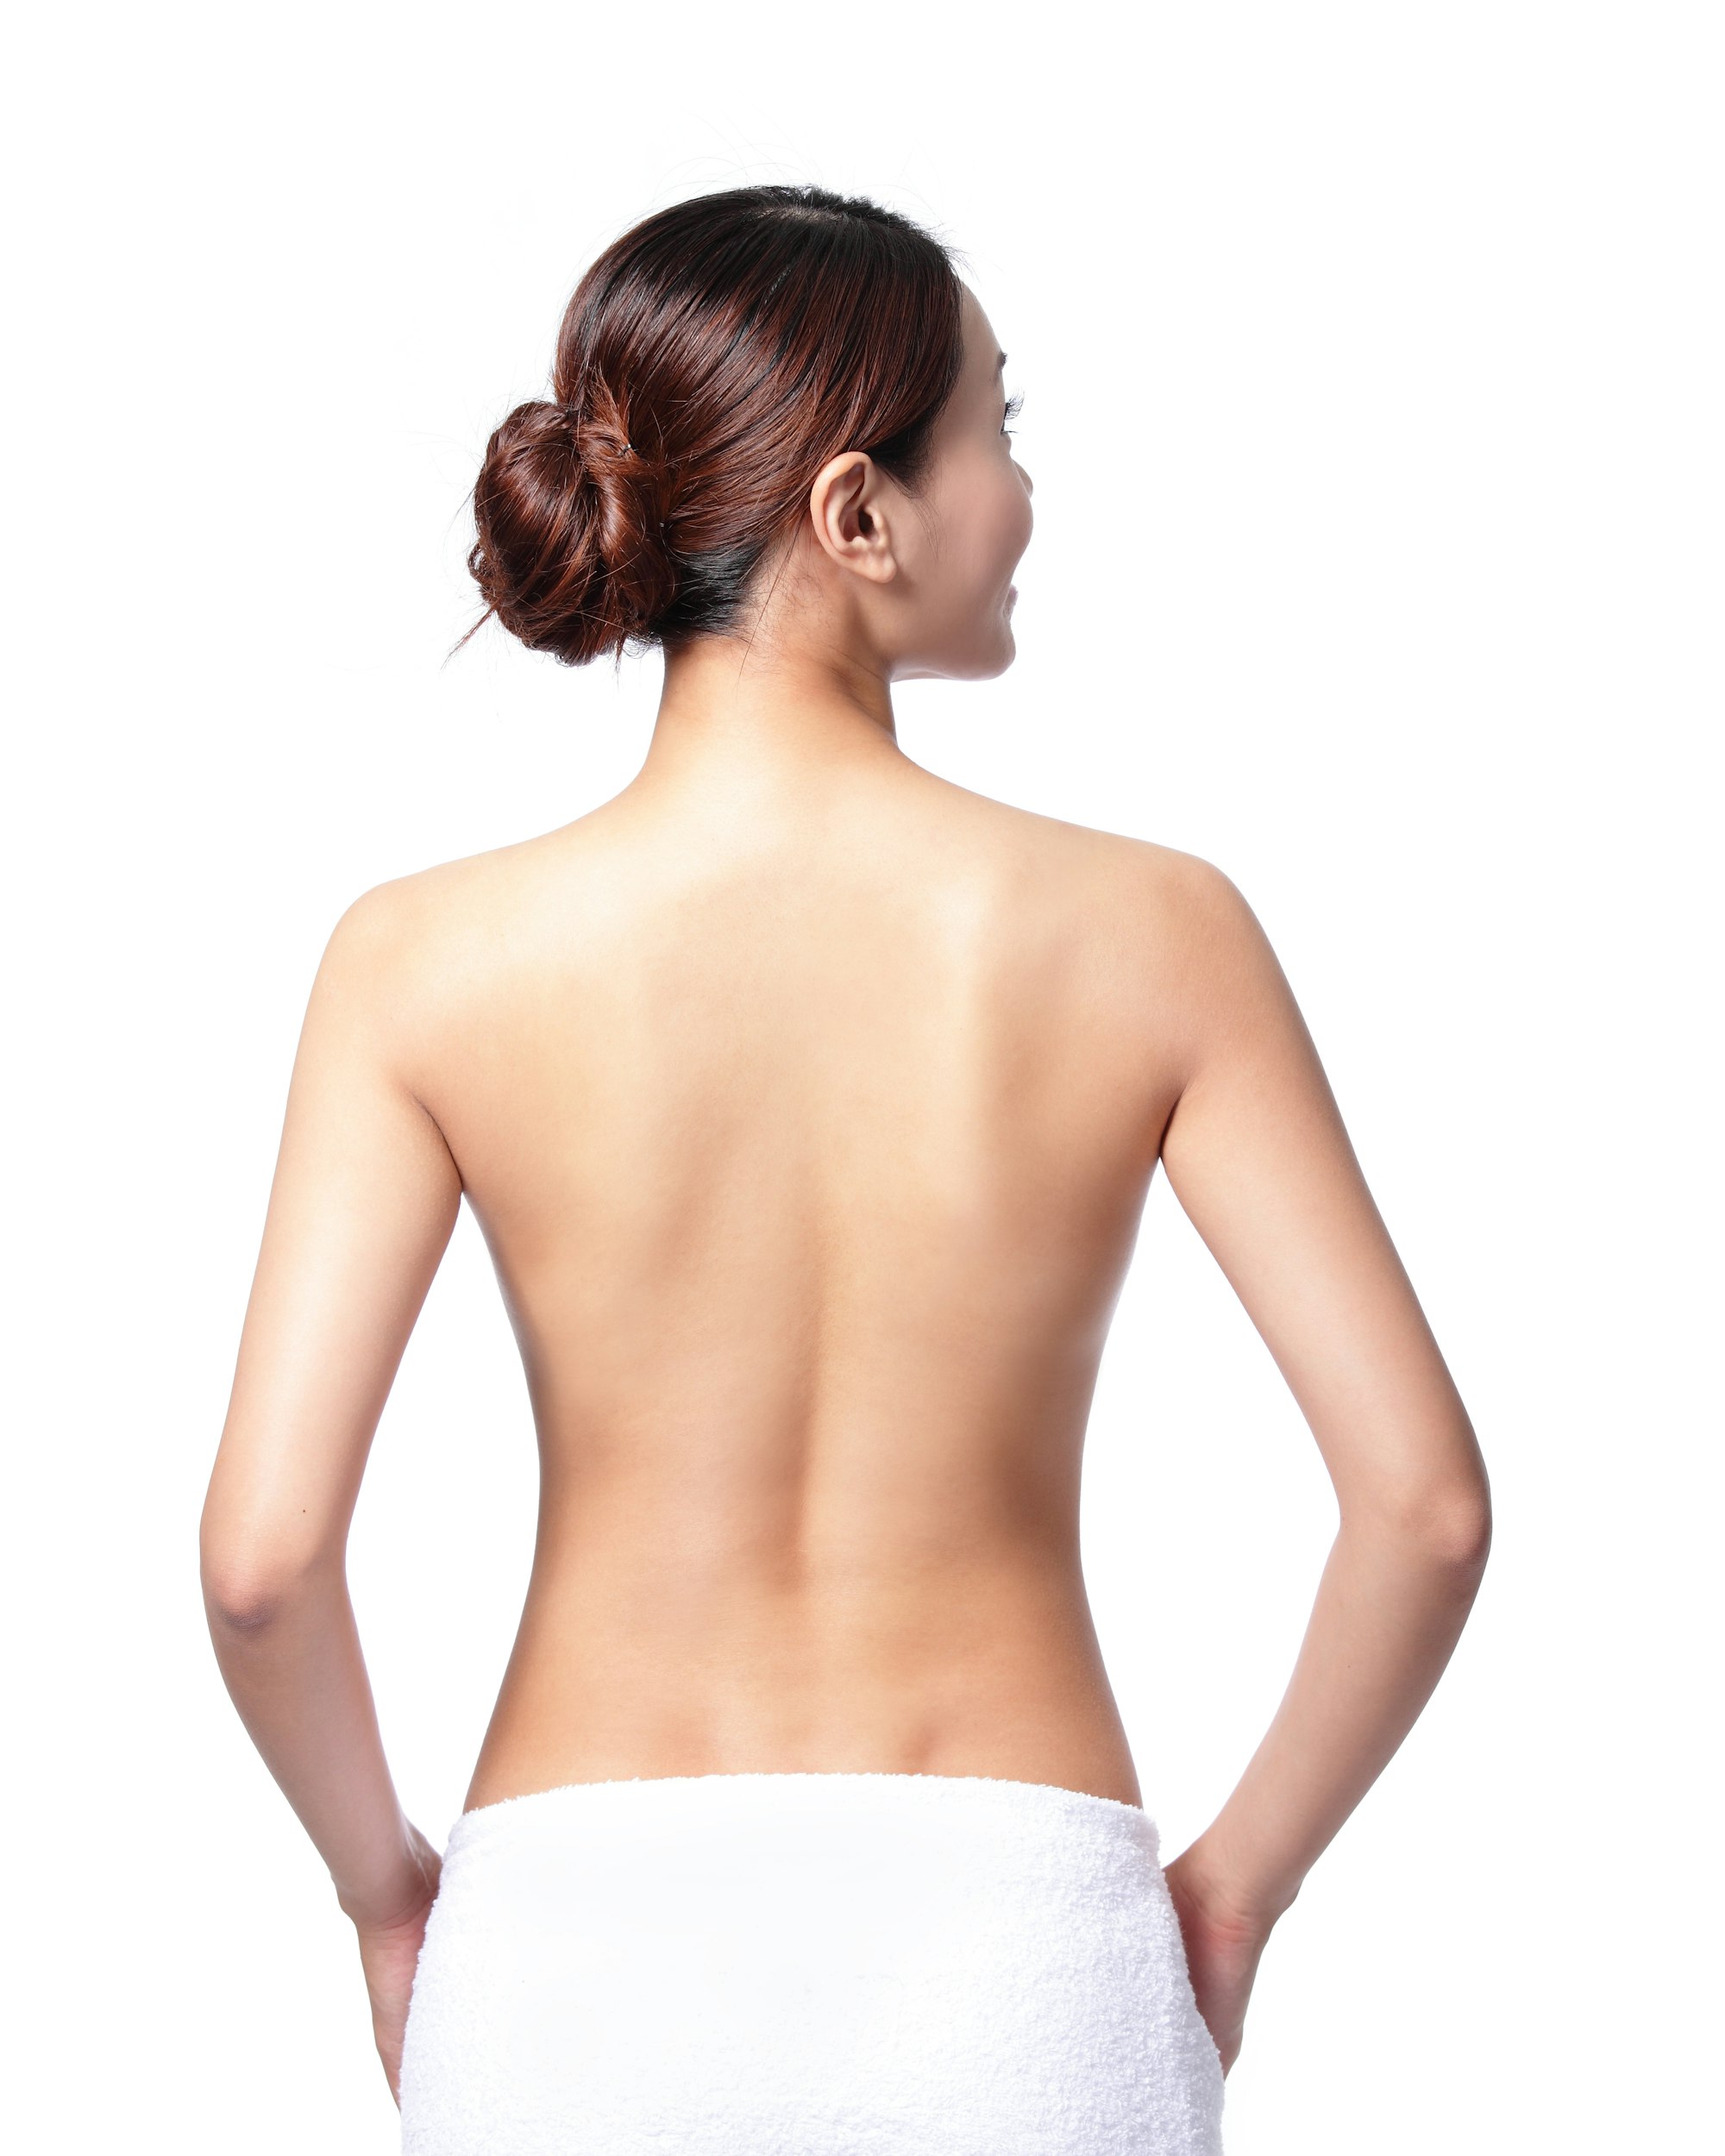 Investigating 3 Lower Back Liposuction Alternatives in Dallas 